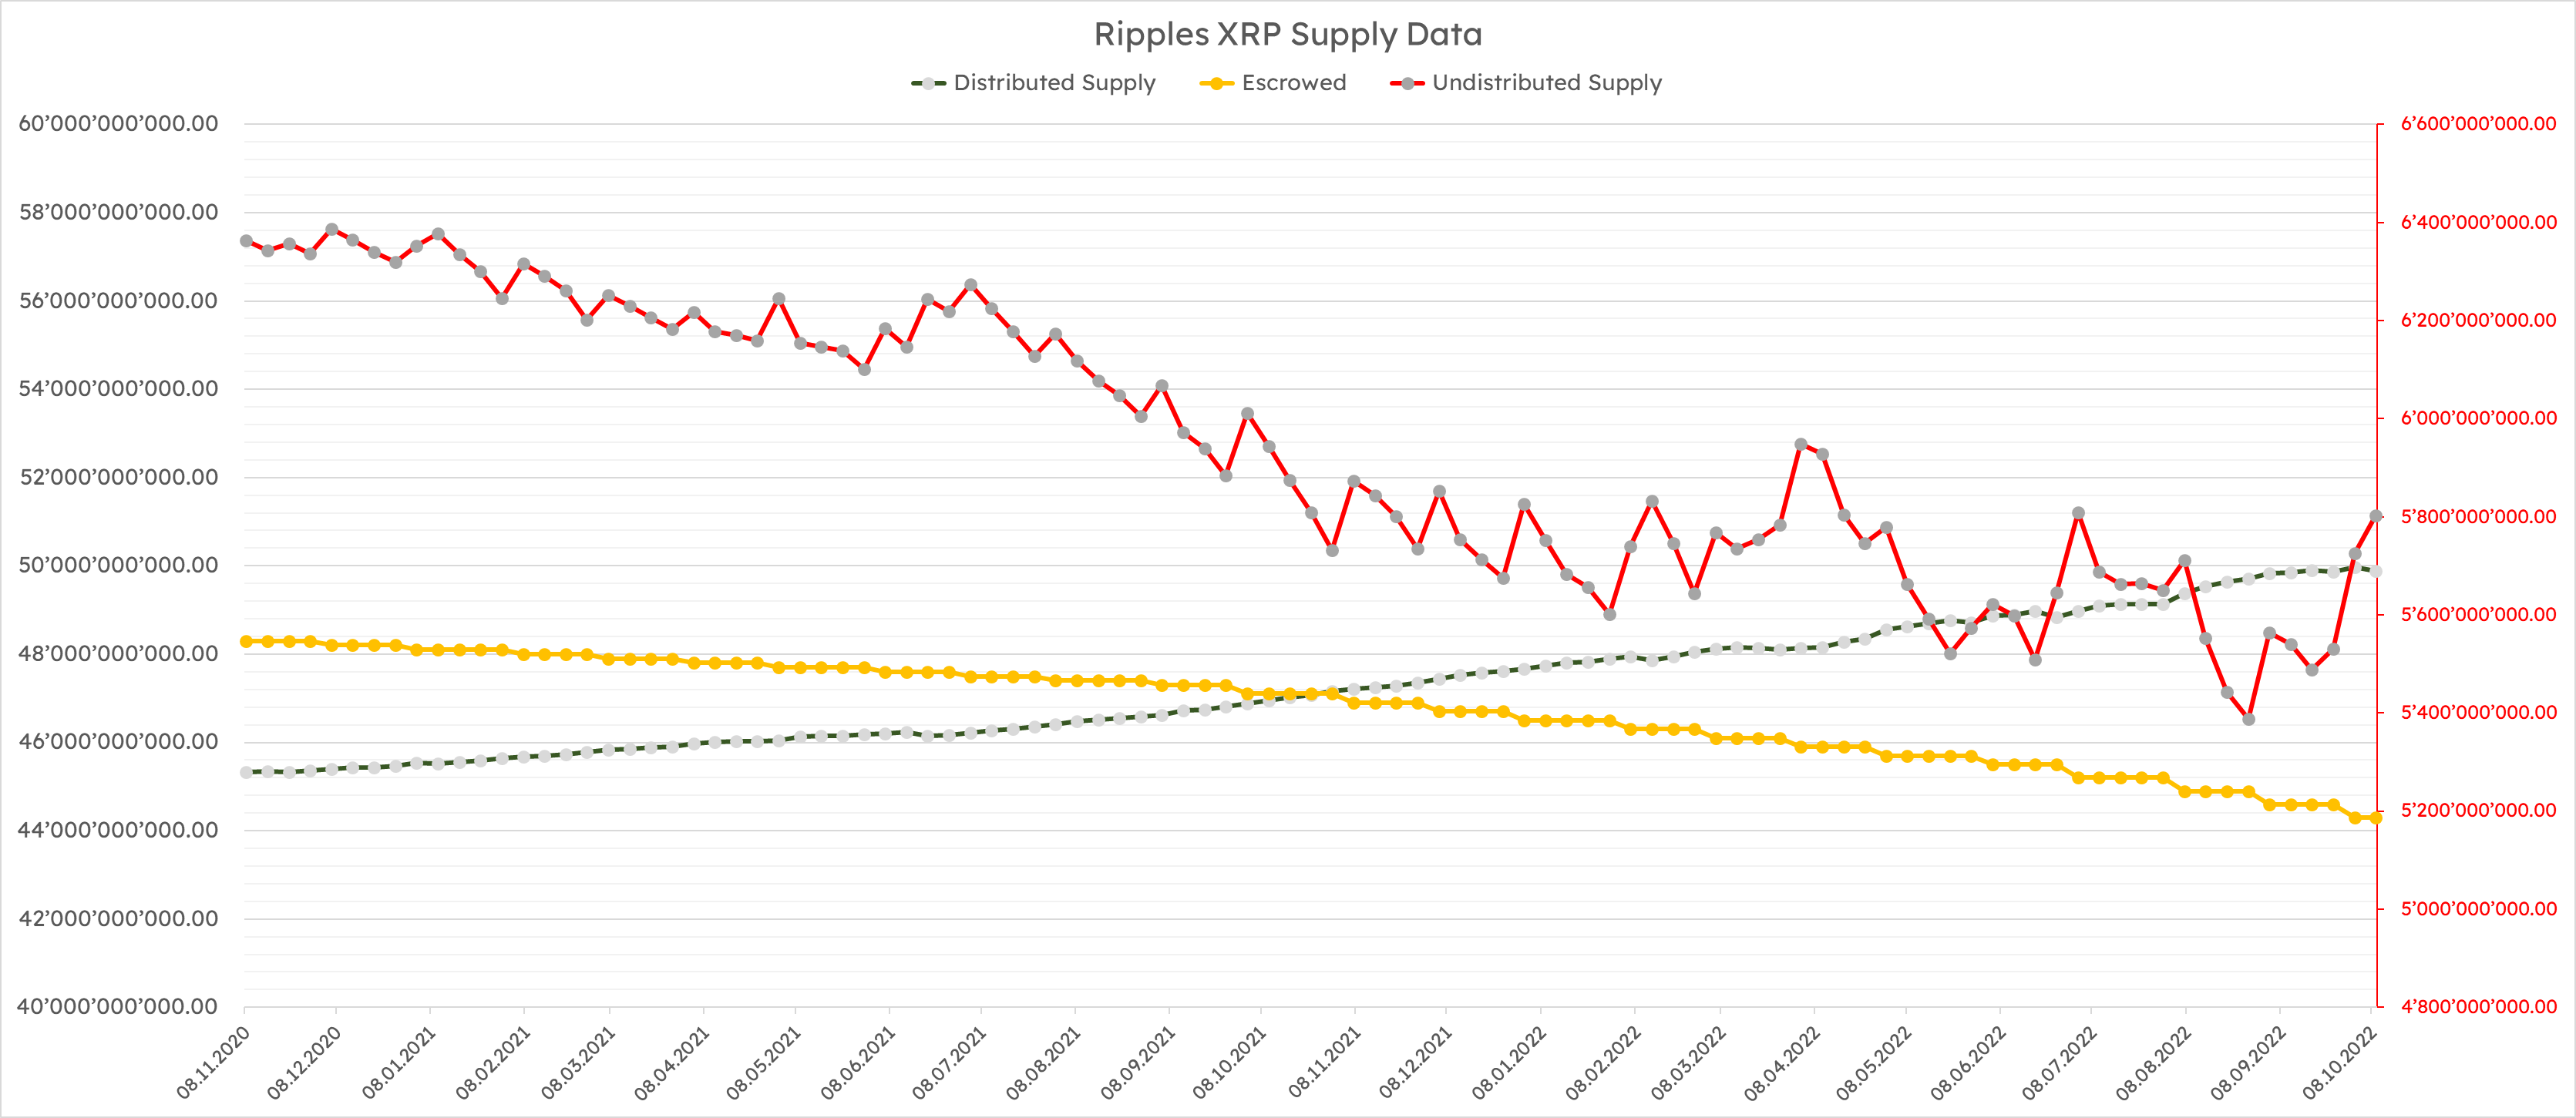 Ripple XRP supply data